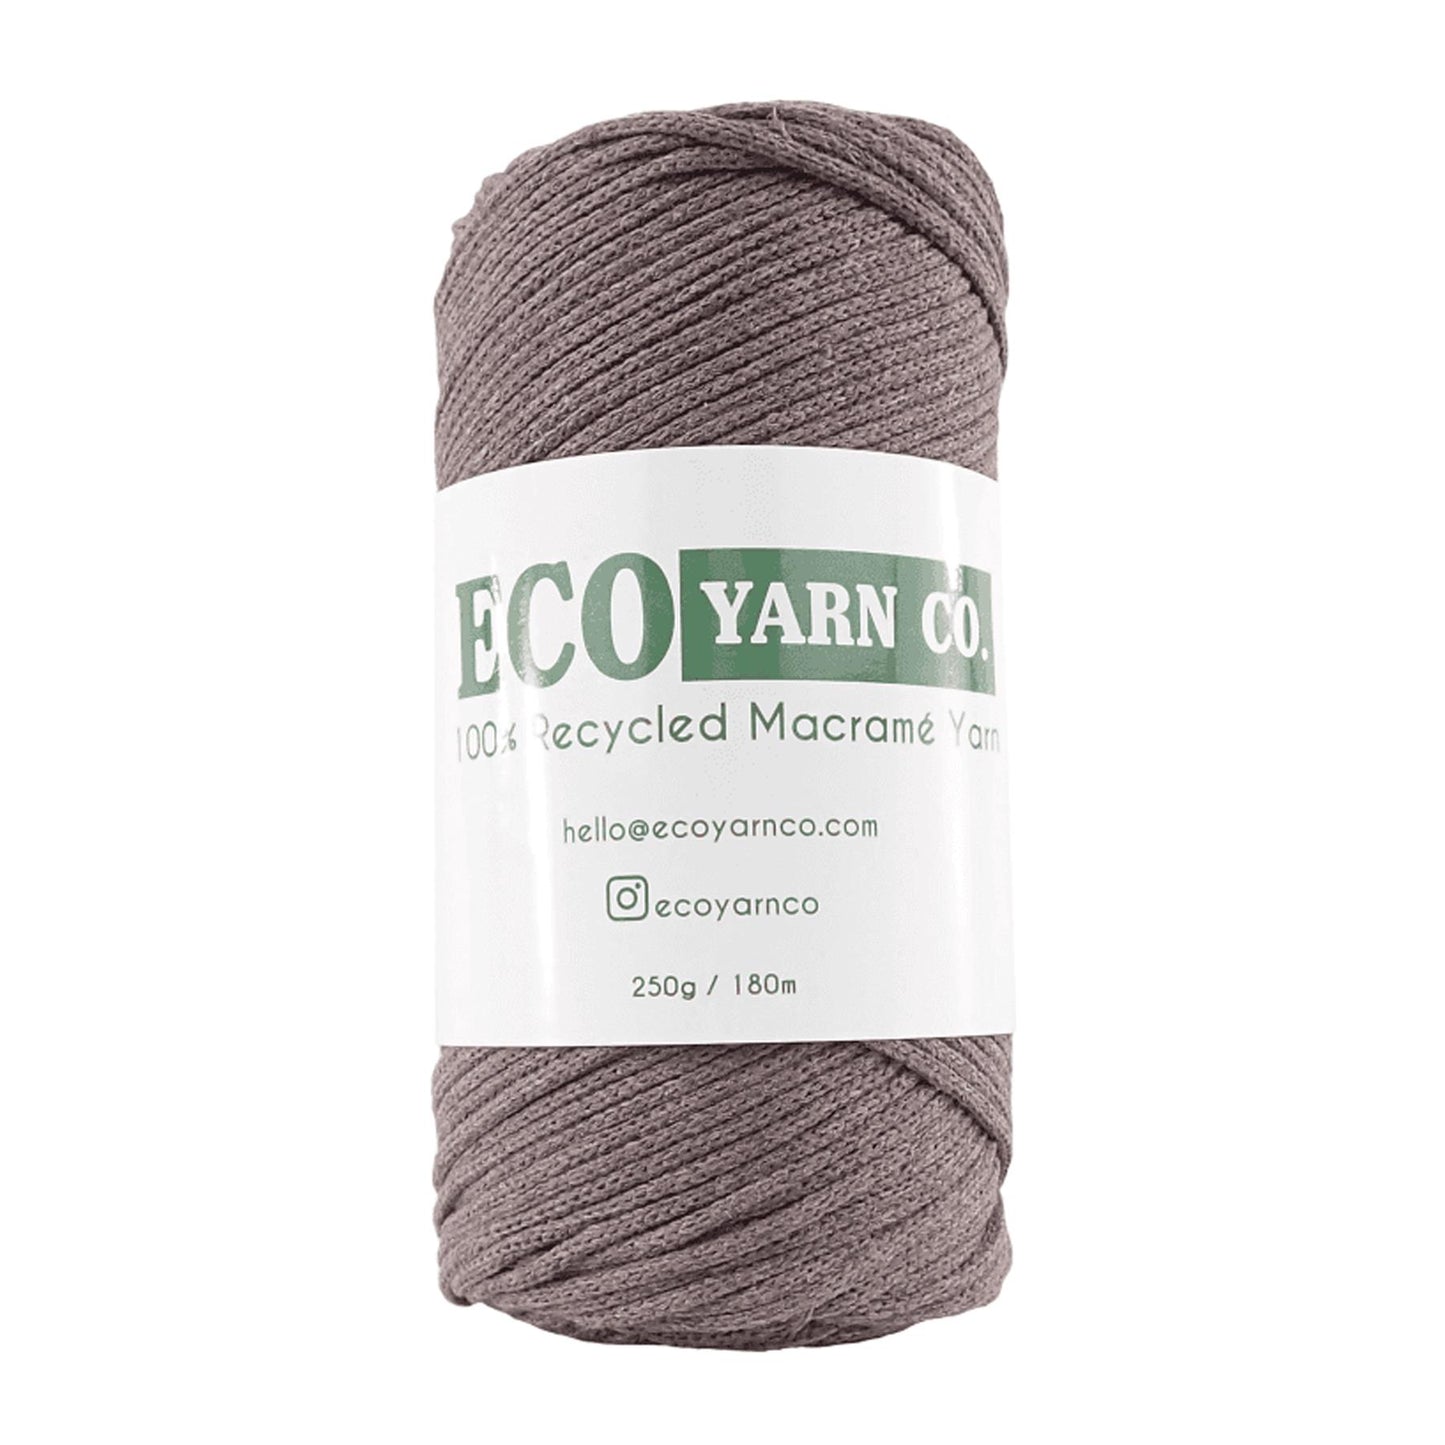 [Eco Yarn Co] Coffee Cotton/Polyester Macrame Yarn - 180M, 250g